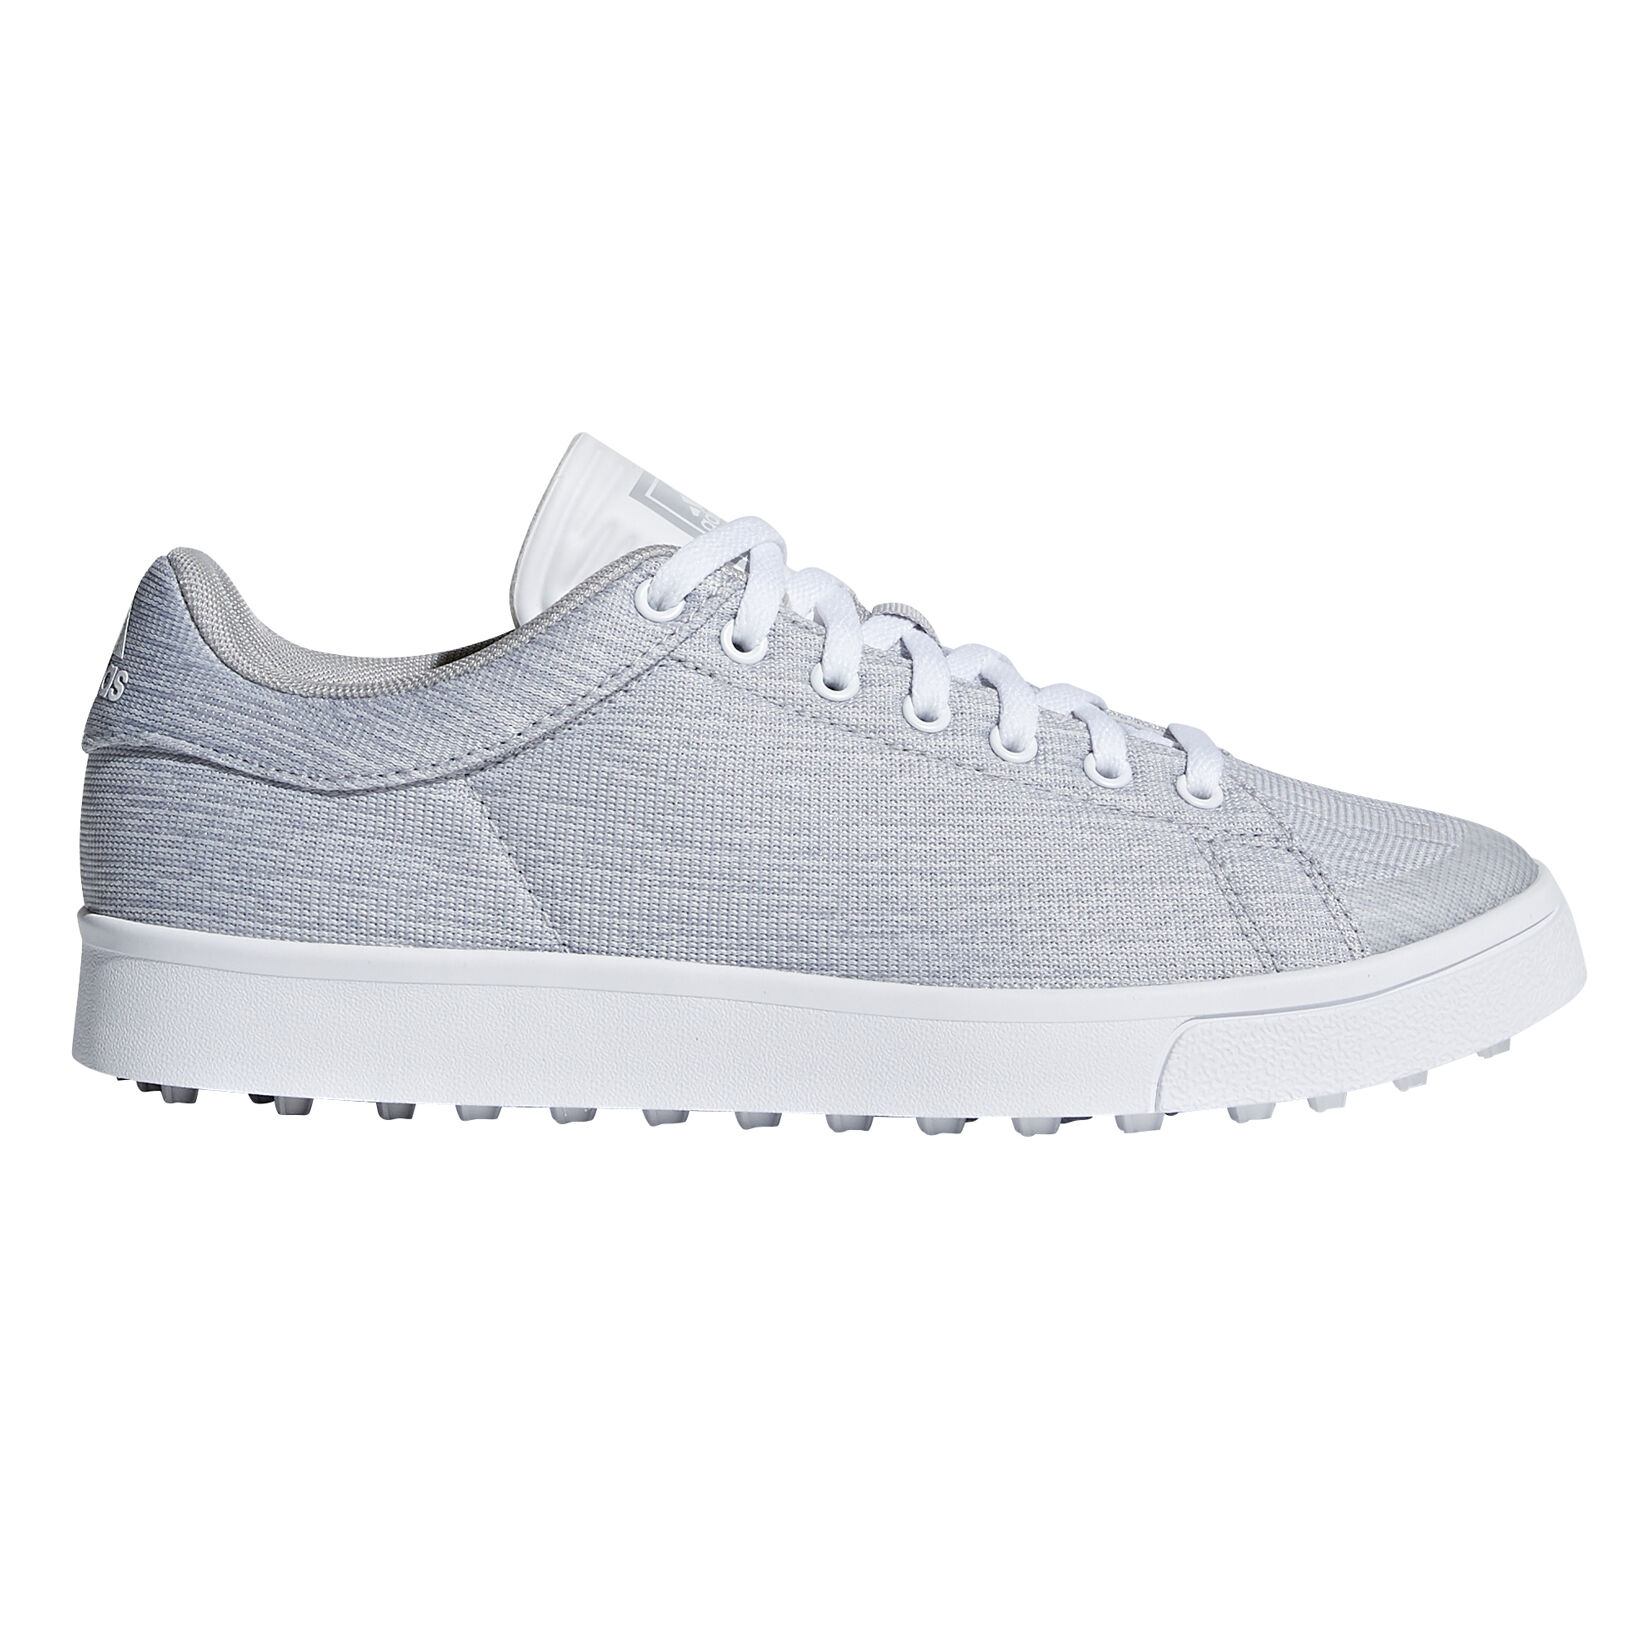 adicross golf shoes grey